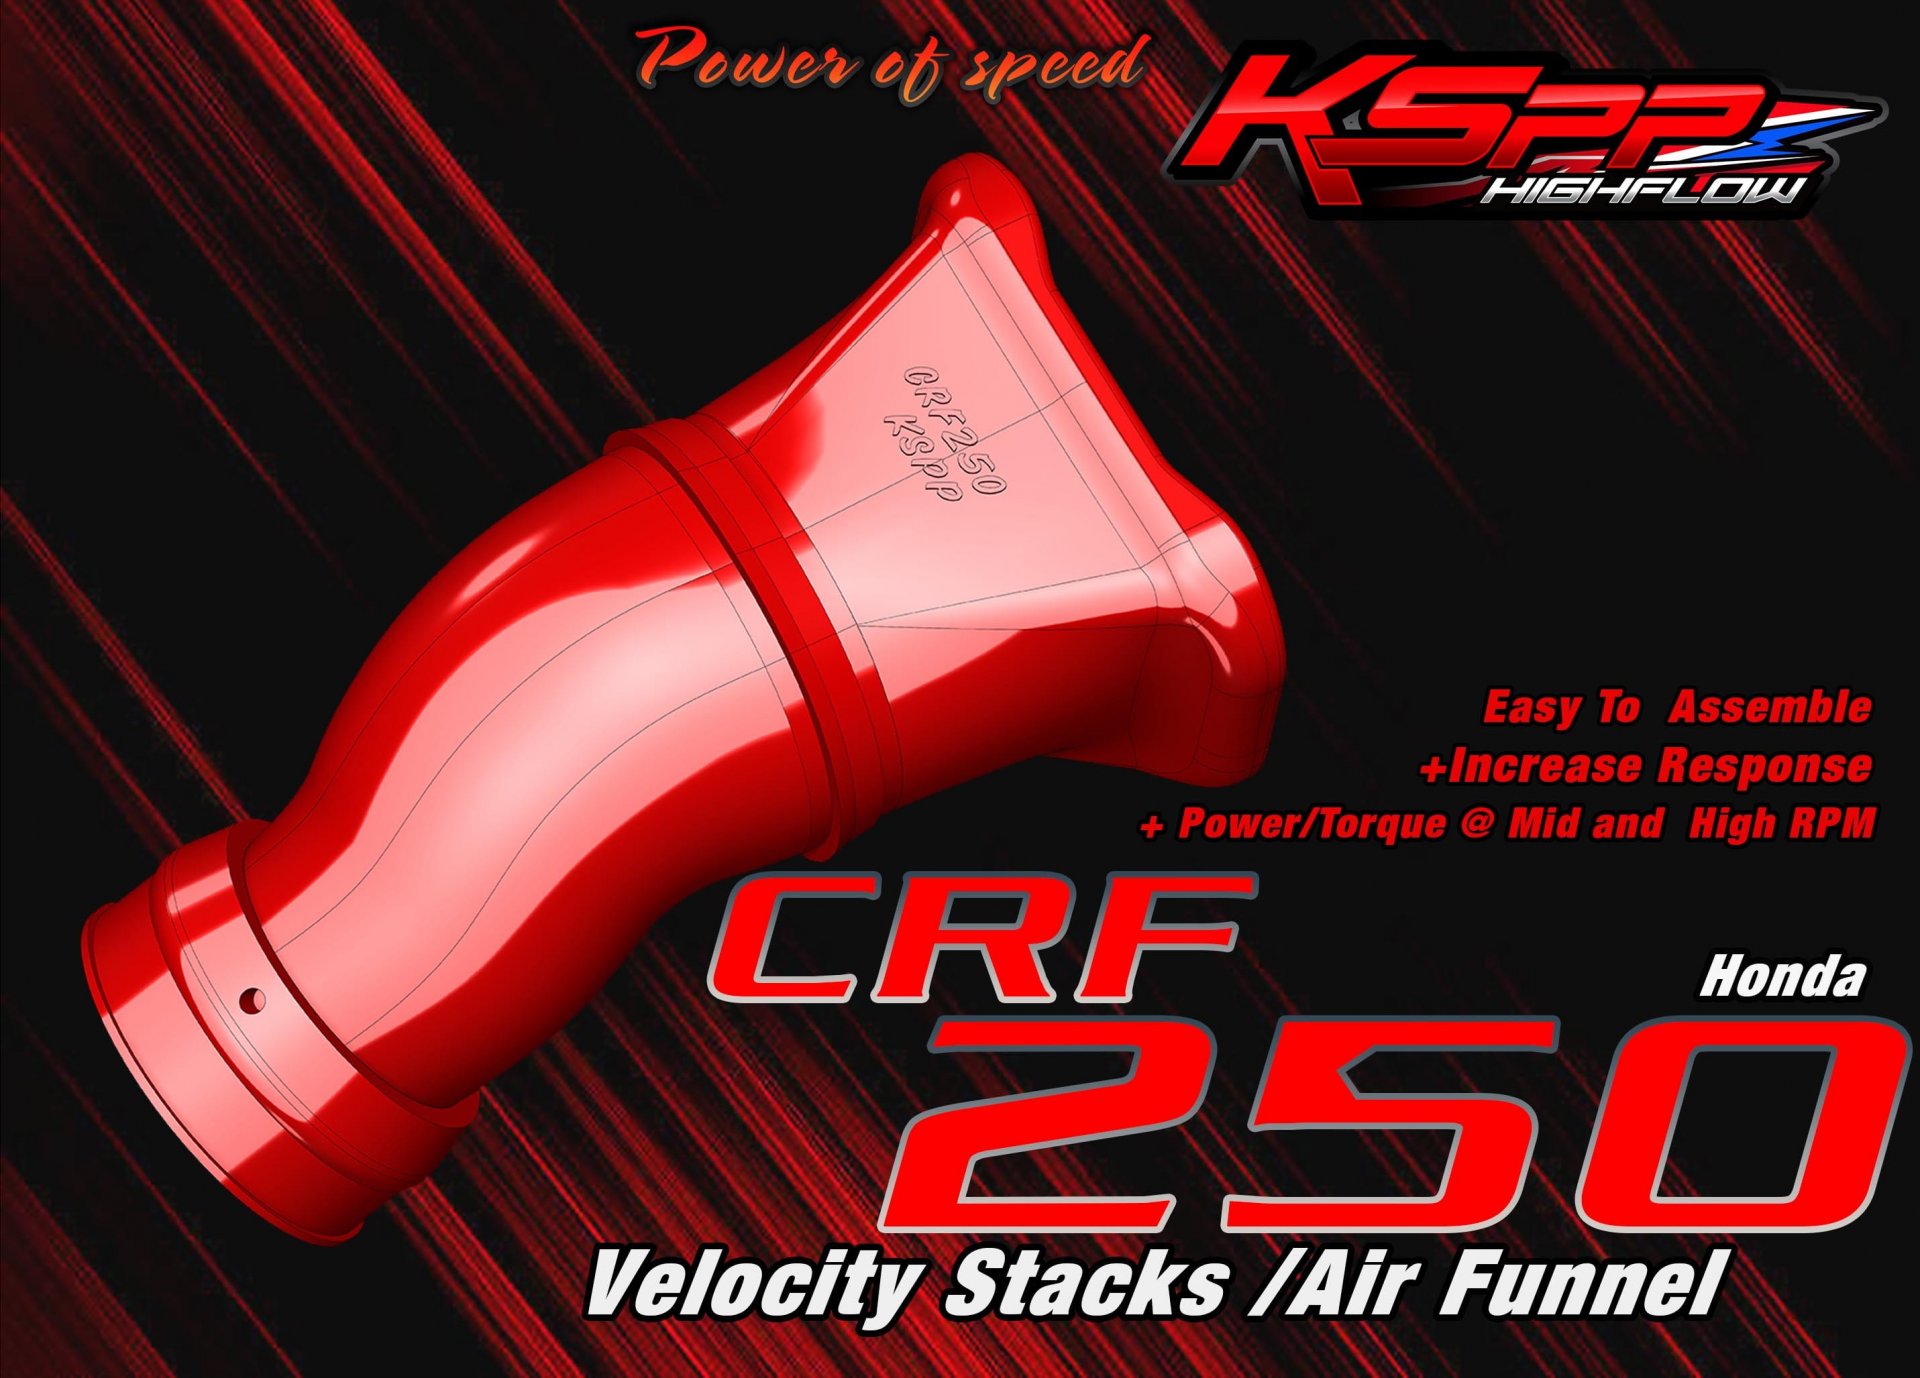 CRF250 ท่อกรอง  Velocity stack -ท่อกรองอากาศ CRF250-Intake air pipe CRF250 -Velocity stack  CRF250 - AirFunnel CRF250    (L)  (Rally) [HONDA]